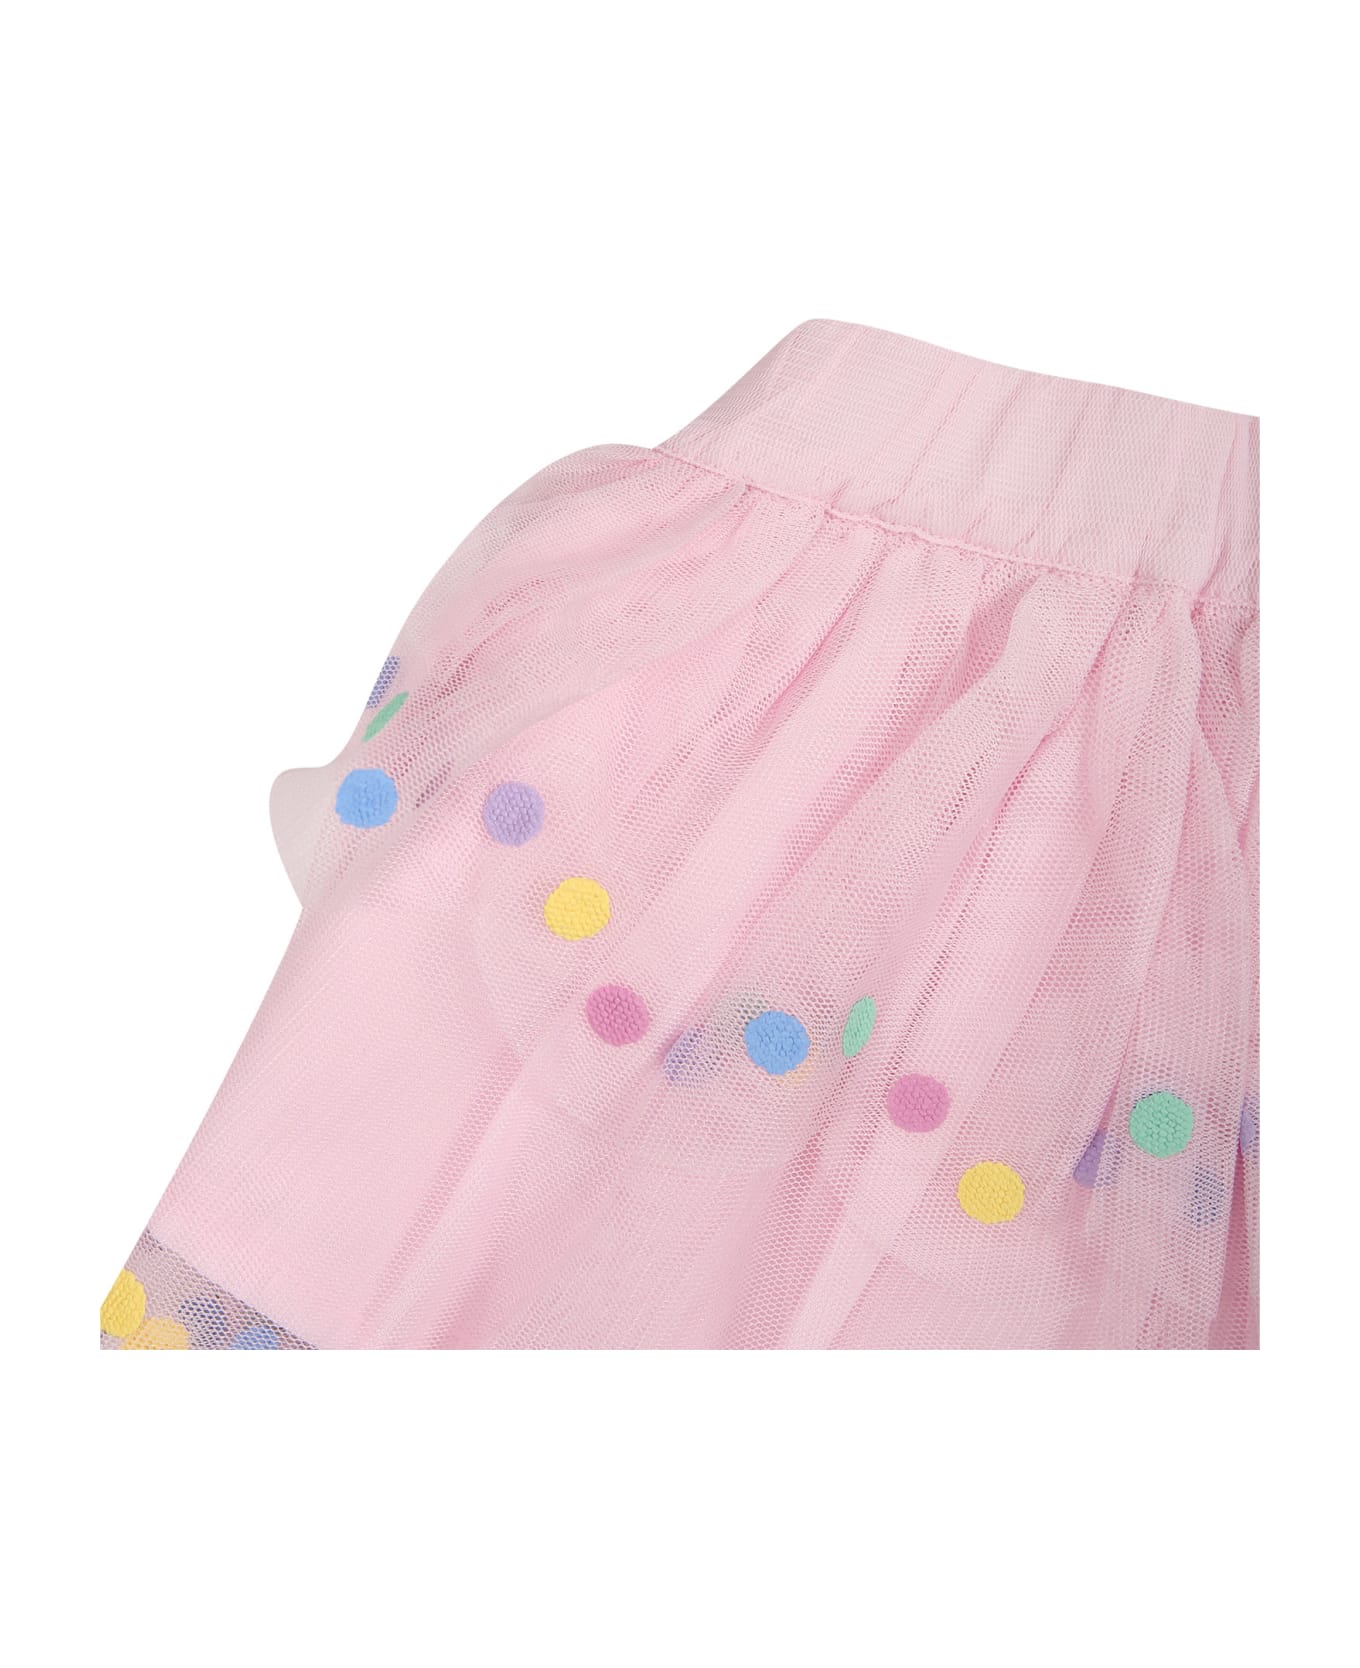 Stella McCartney Kids Pink Tulle Skirt For Baby Girl - Pink ボトムス